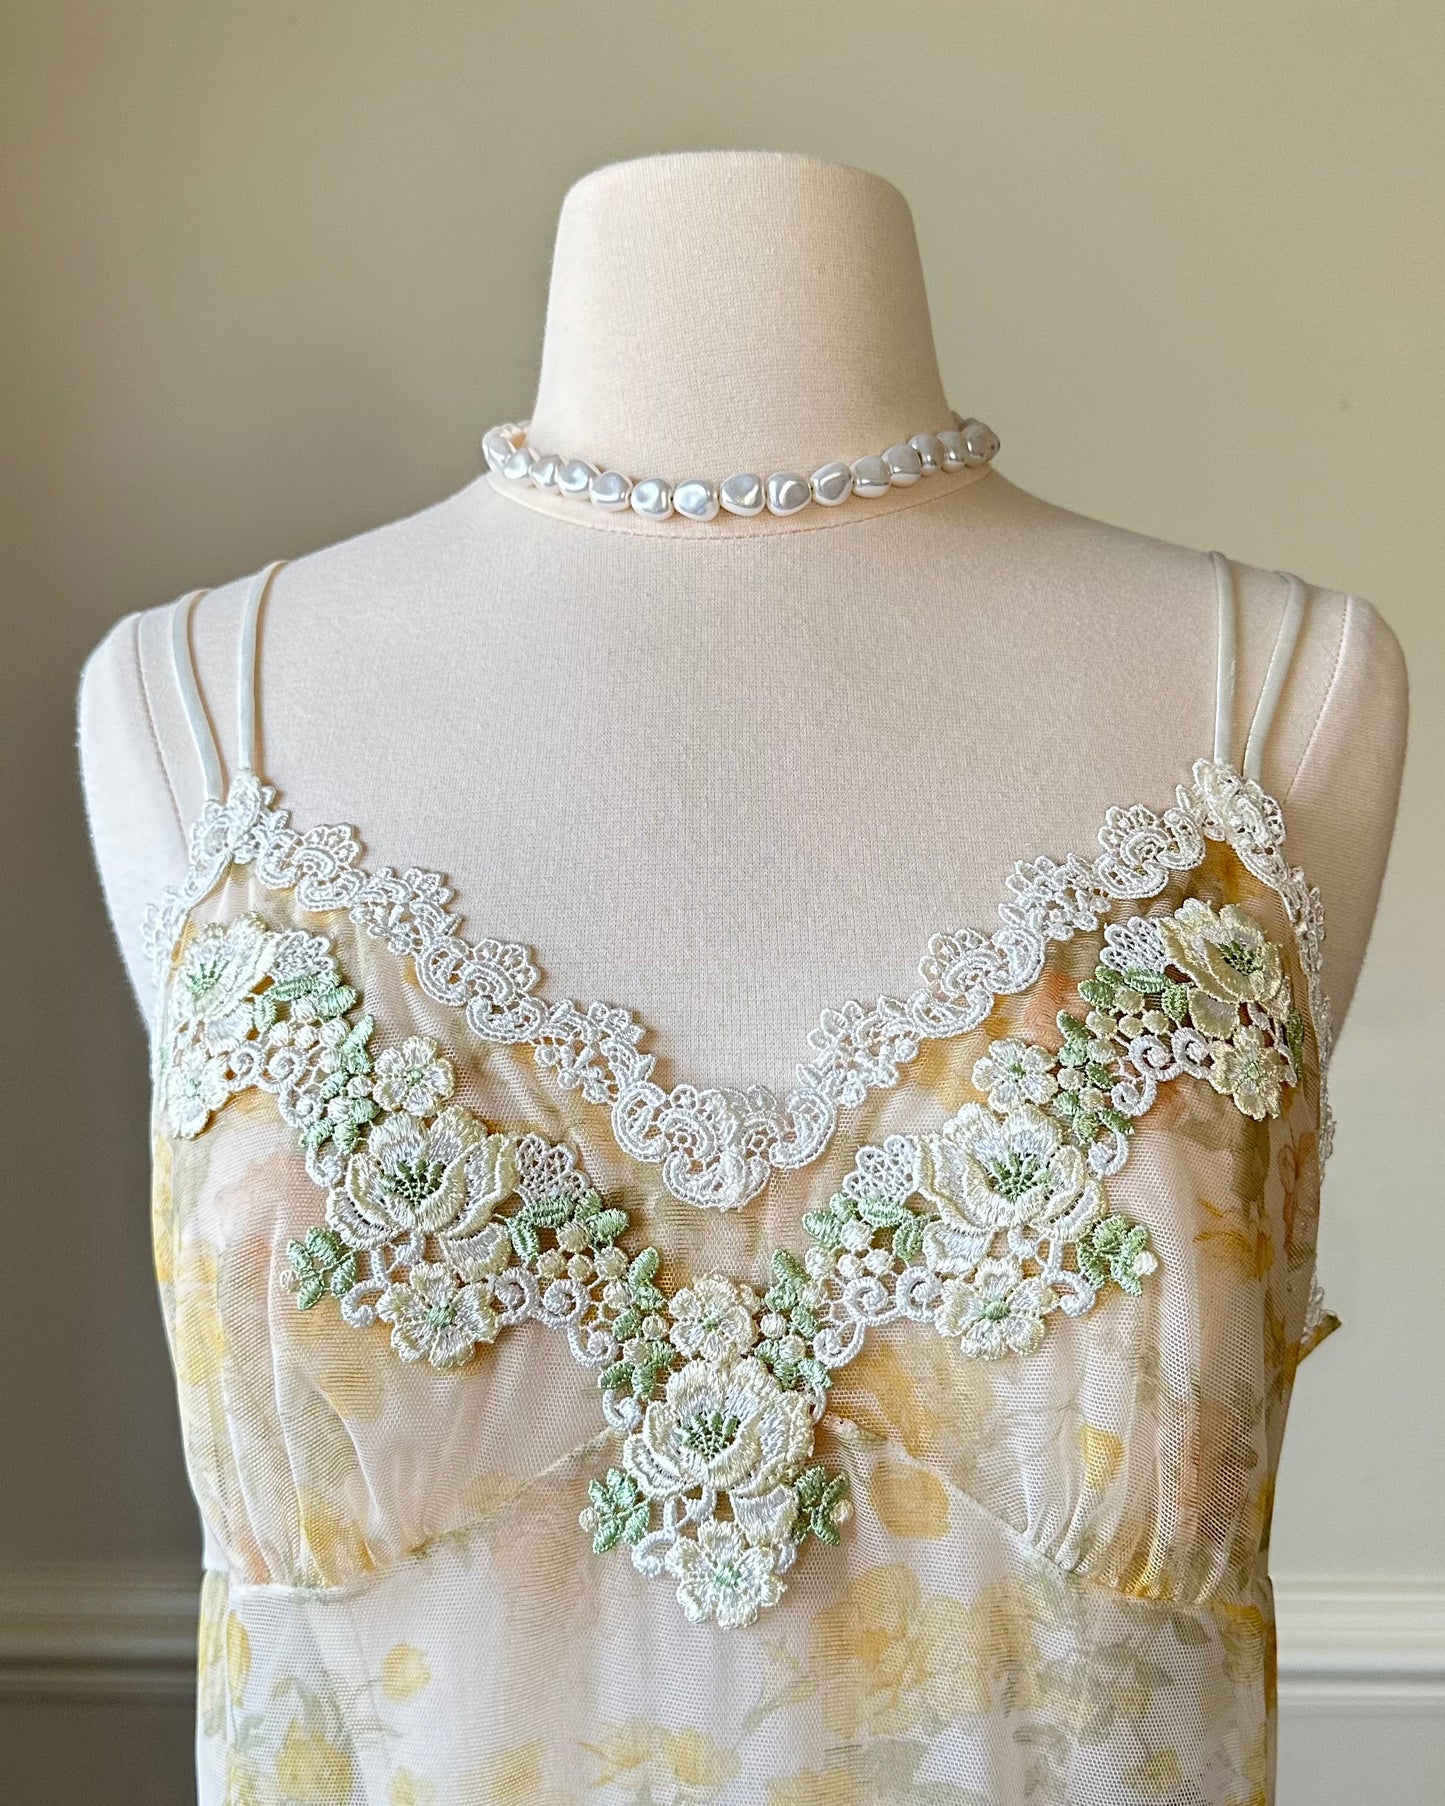 Vintage fairy sheer slip dress featuring delicate amber rosette prints on sheer chiffon